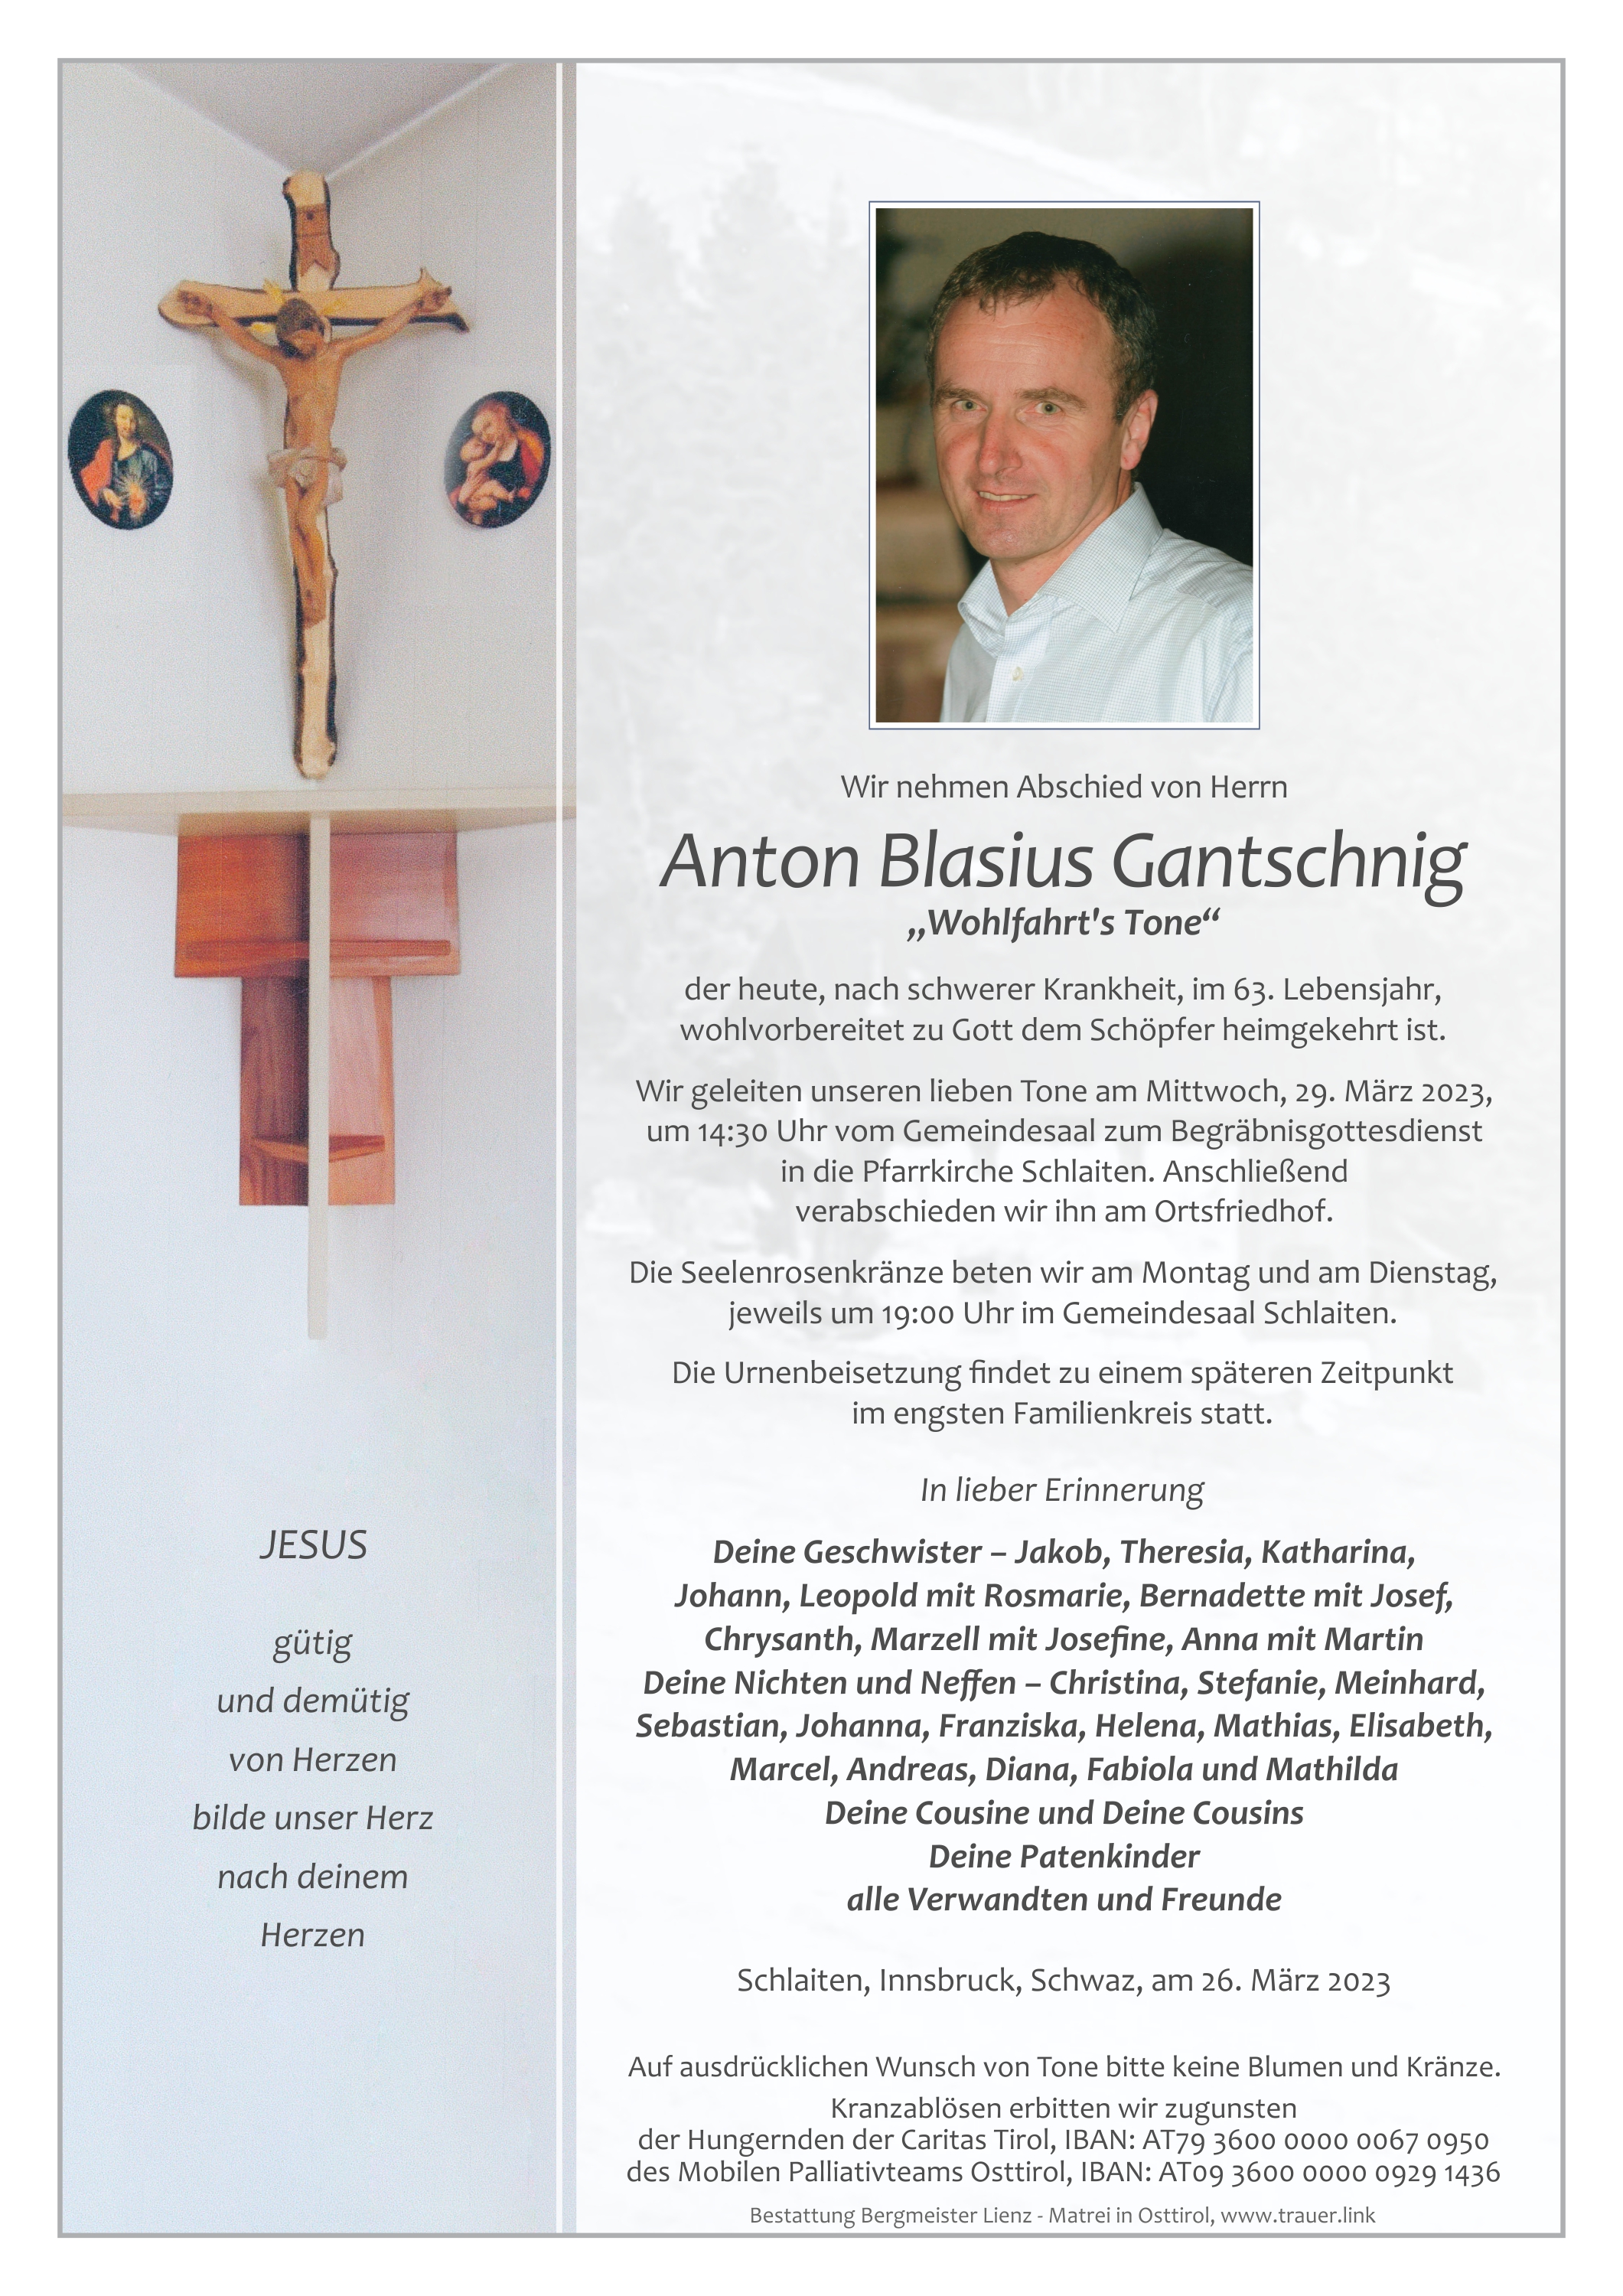 Anton Blasius Gantschnig